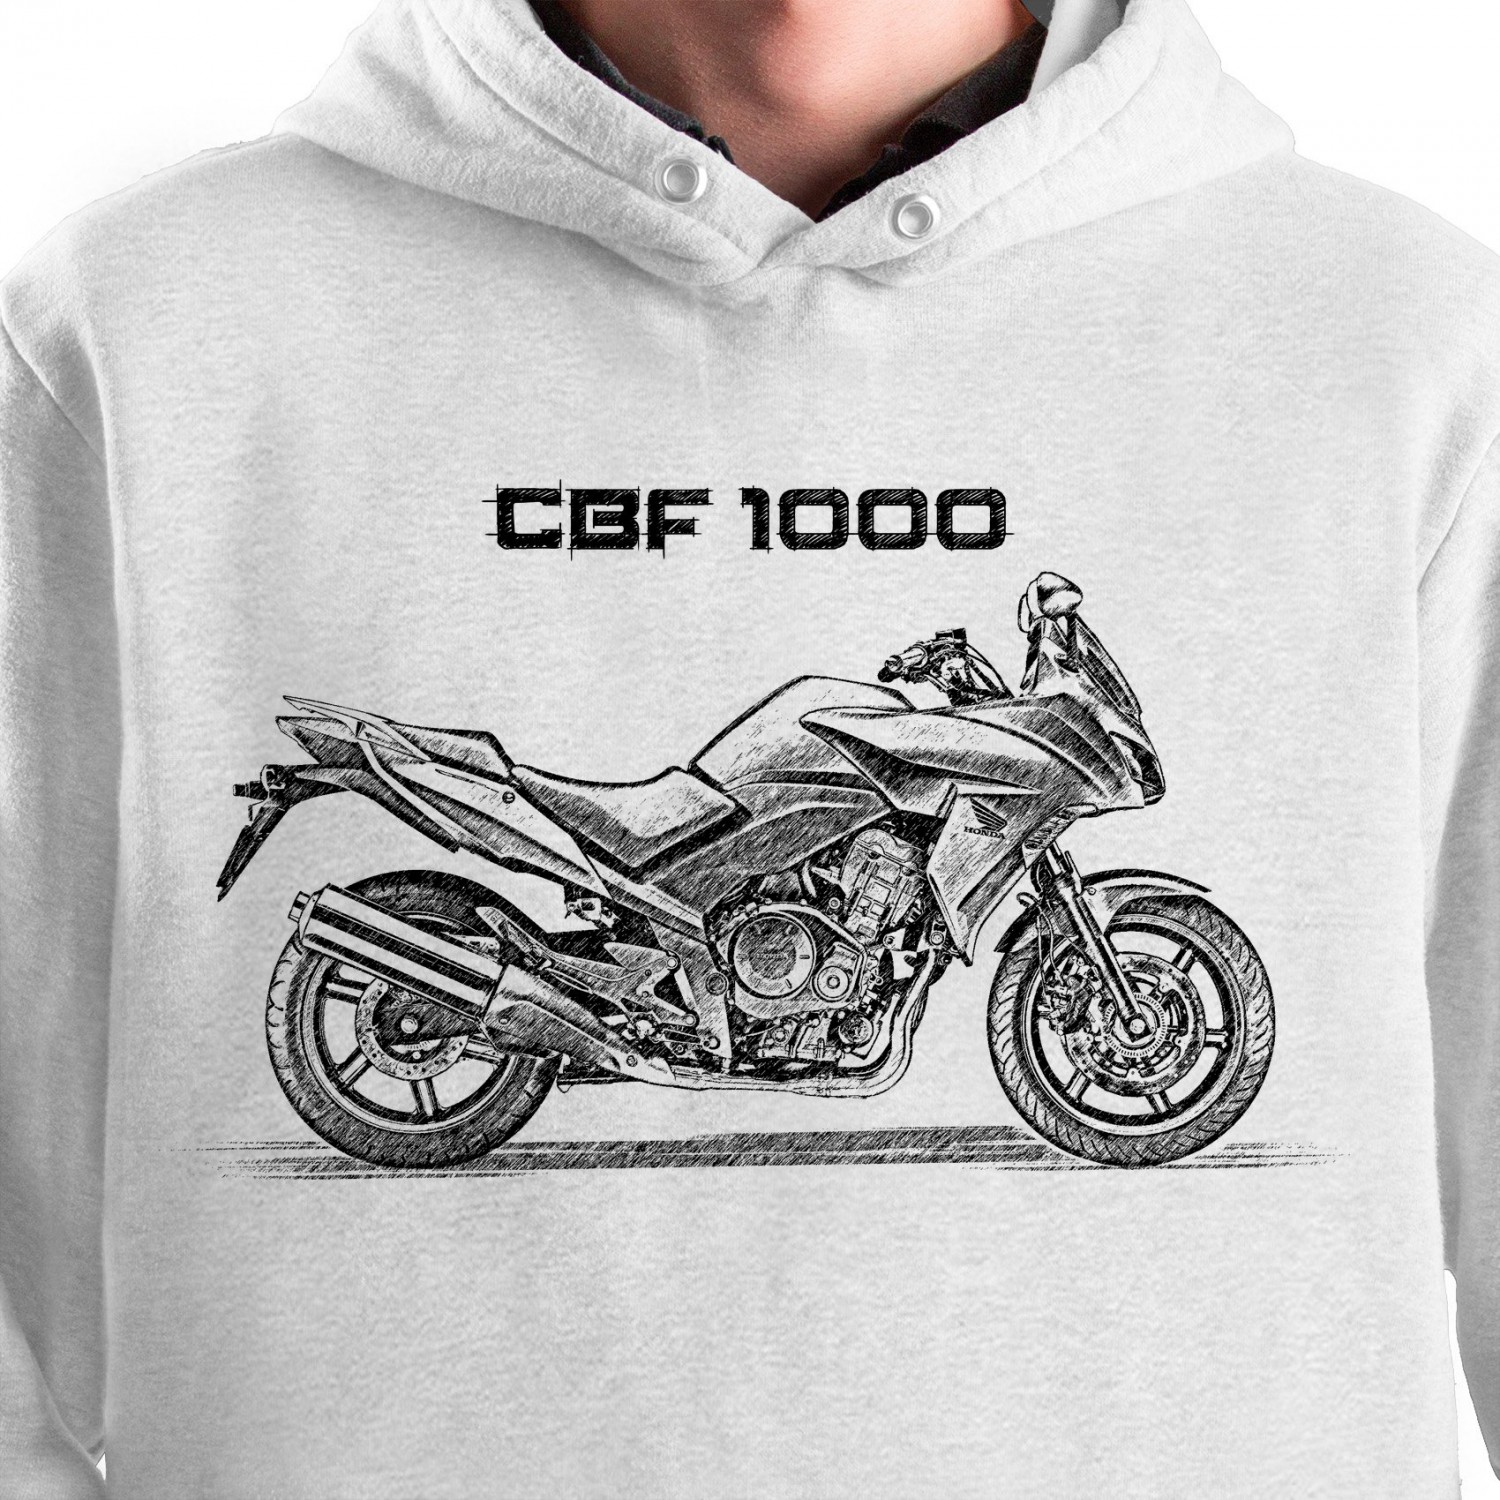 White T-shirt with Honda CBF 1000. Gift for motorcyclist.